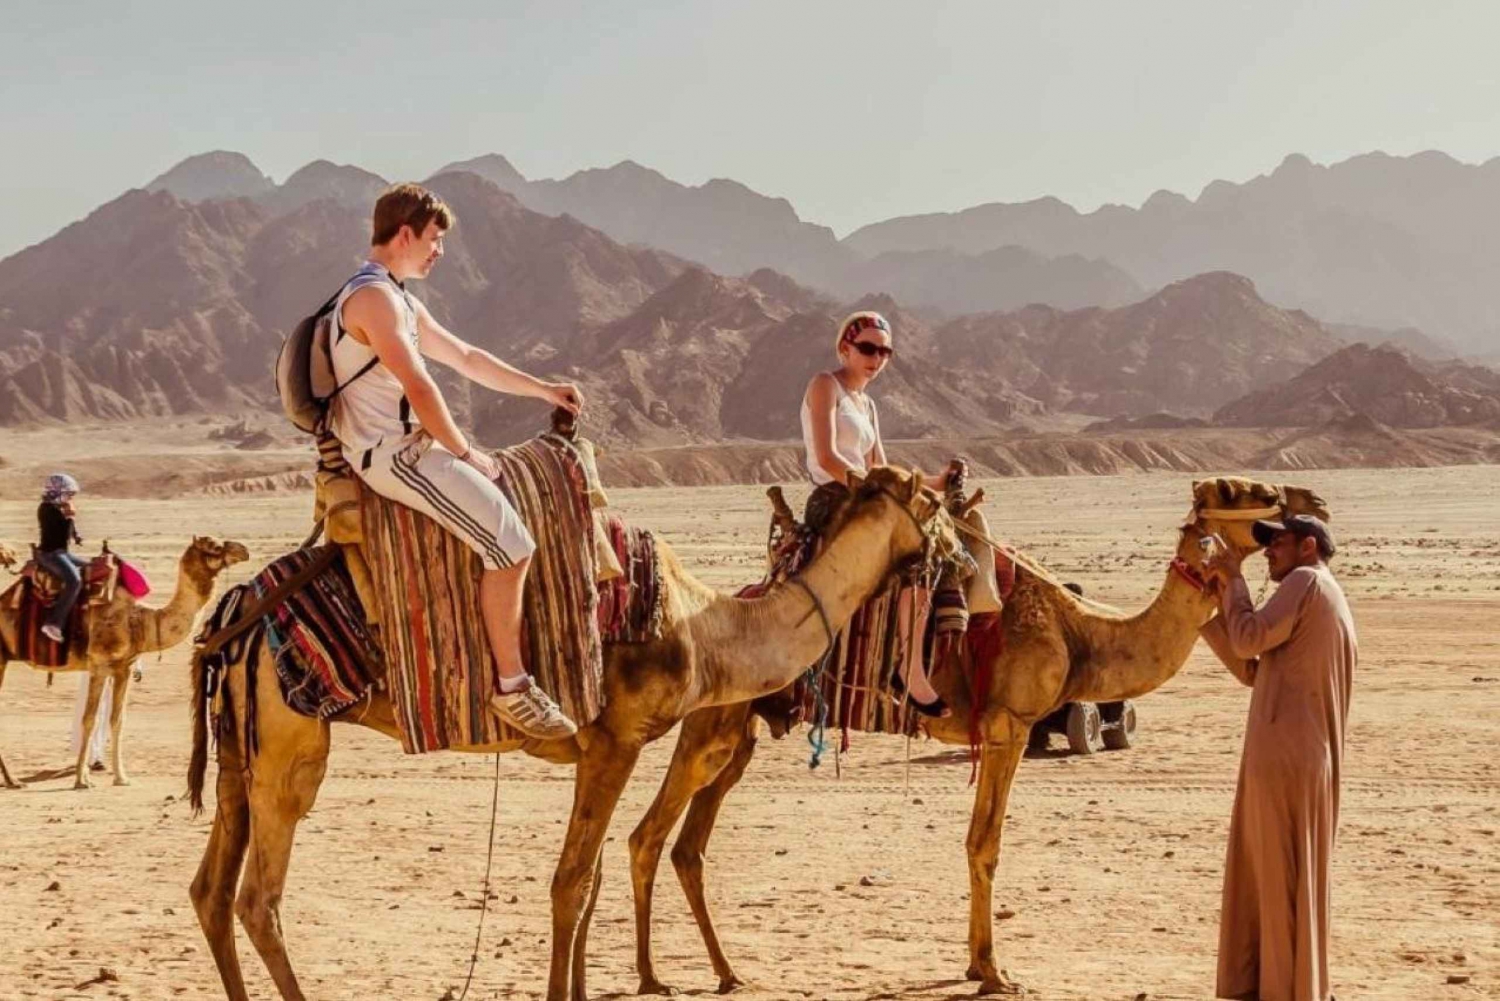 Sharm: ATV, kamelenrit, BBQ diner & show w privé transfer